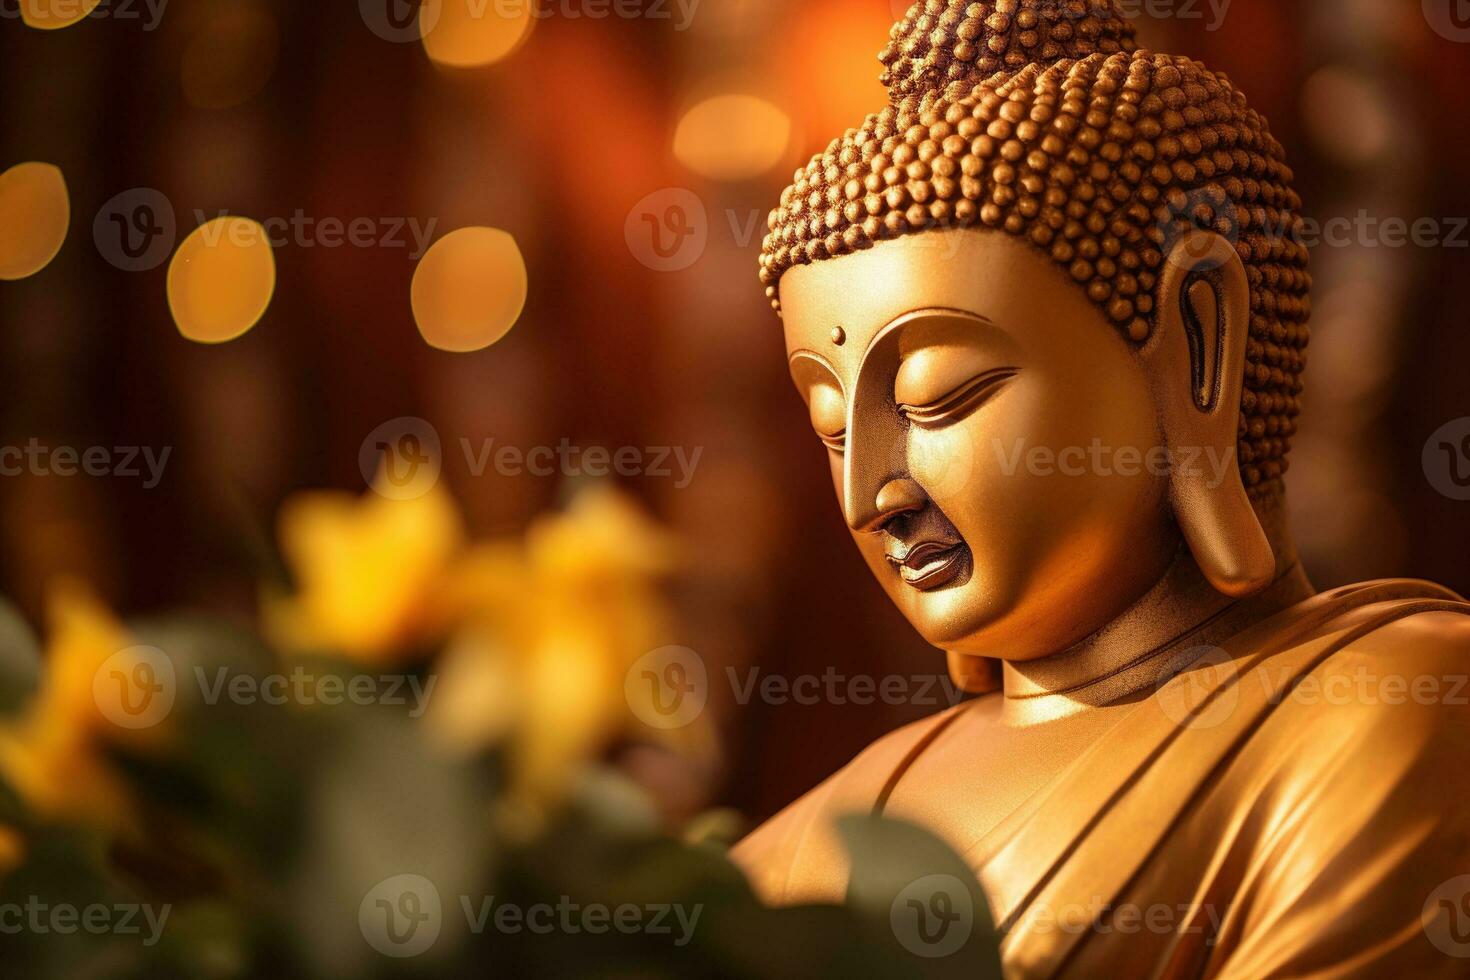 ai gegenereerd detailopname van Boeddha standbeeld in boeddhistisch tempel foto